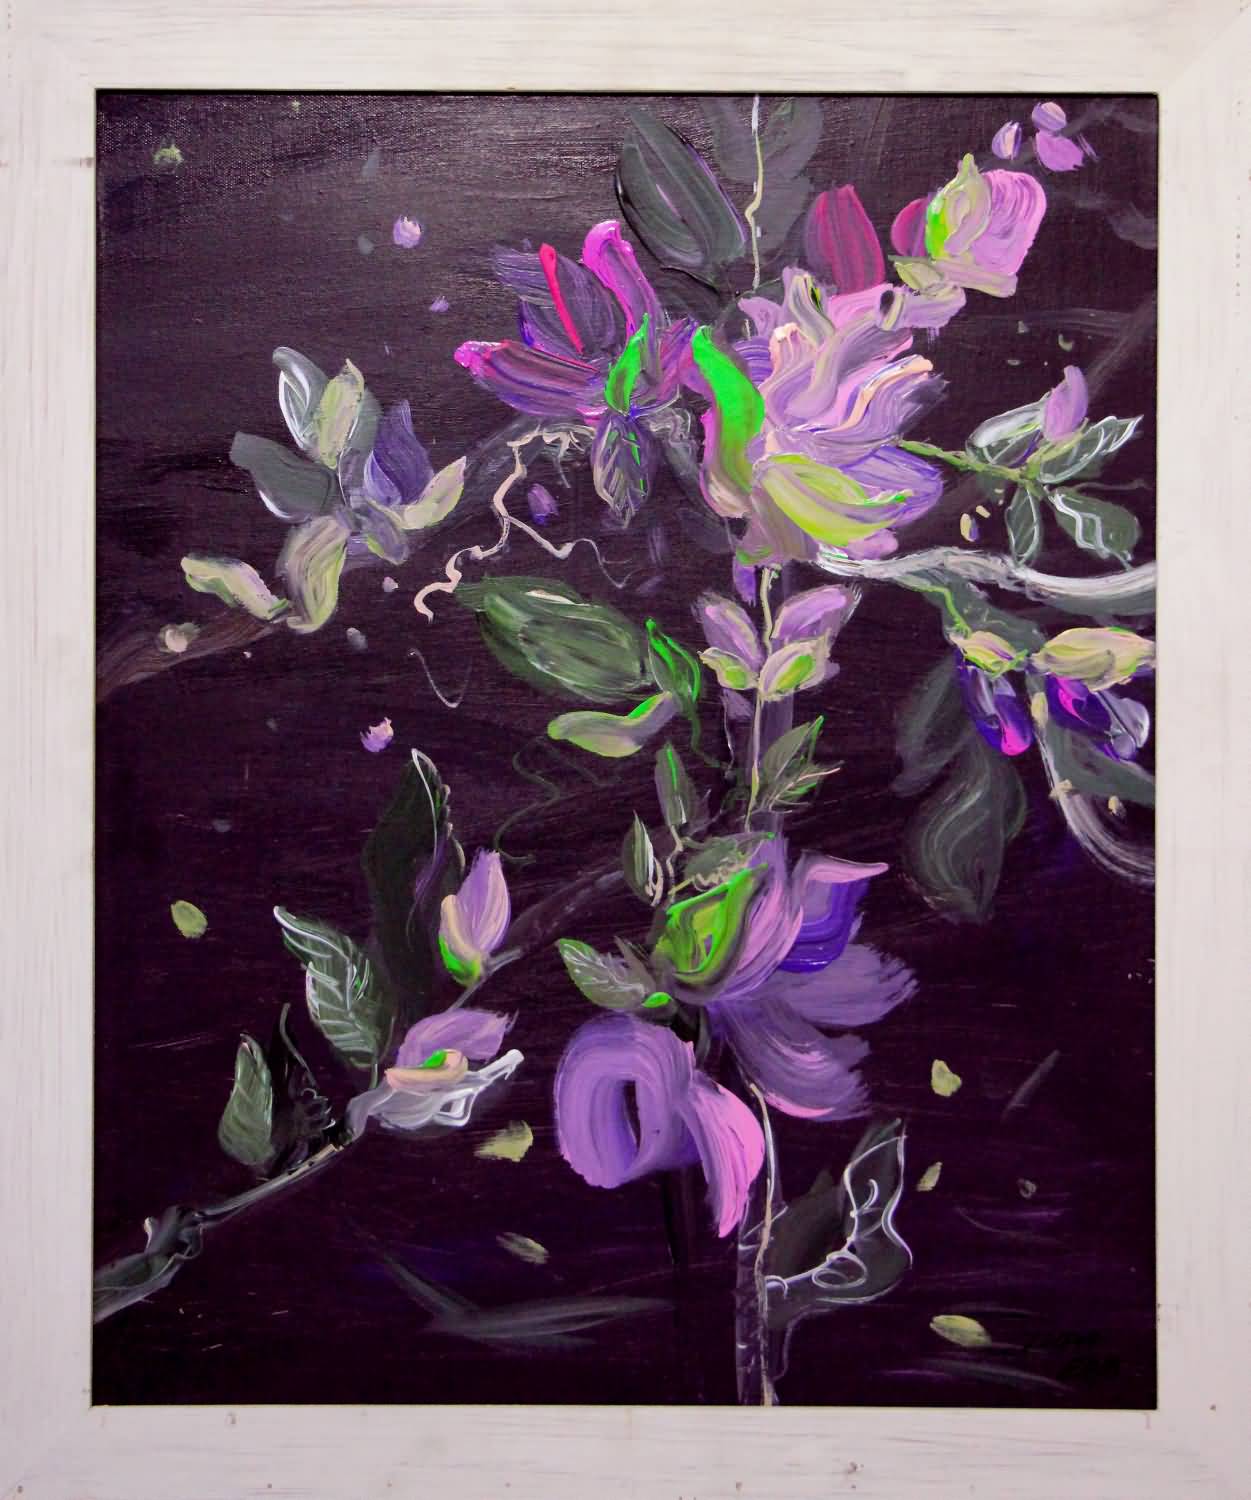 14. Violet. Oil on canvas, 2021